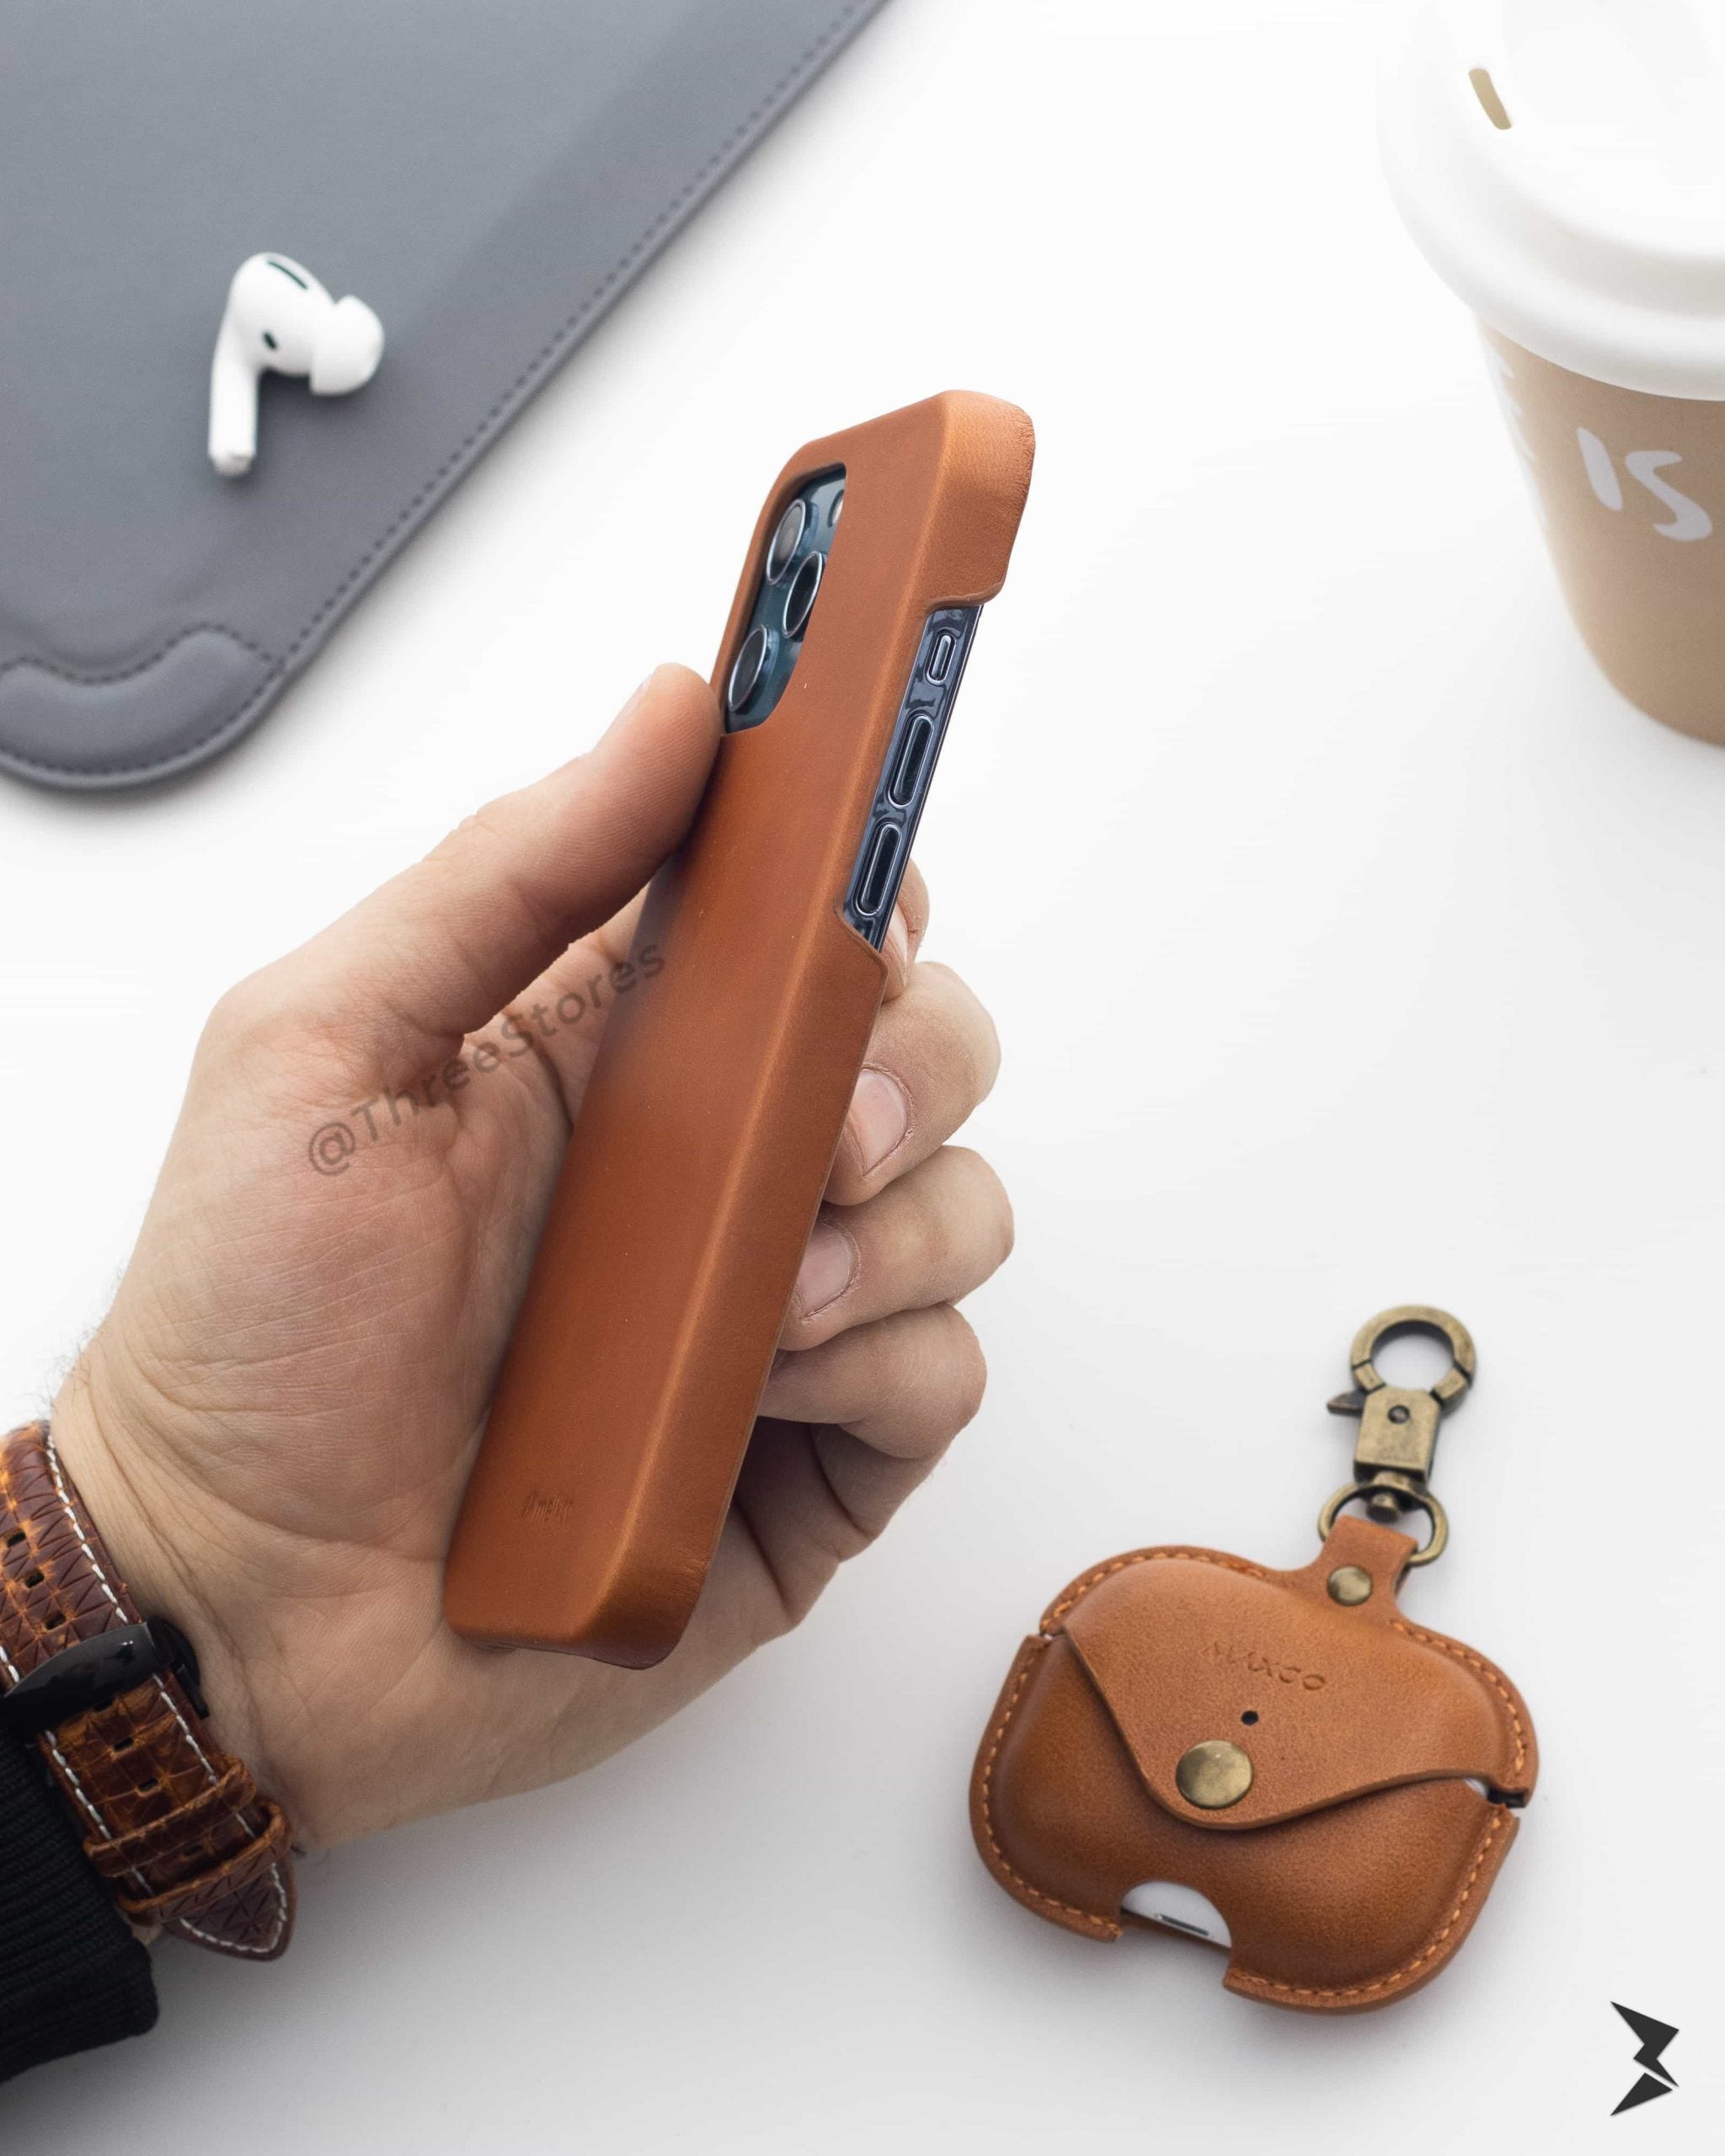 Melkco Slim Leather Case iPhone 12 Pro Max